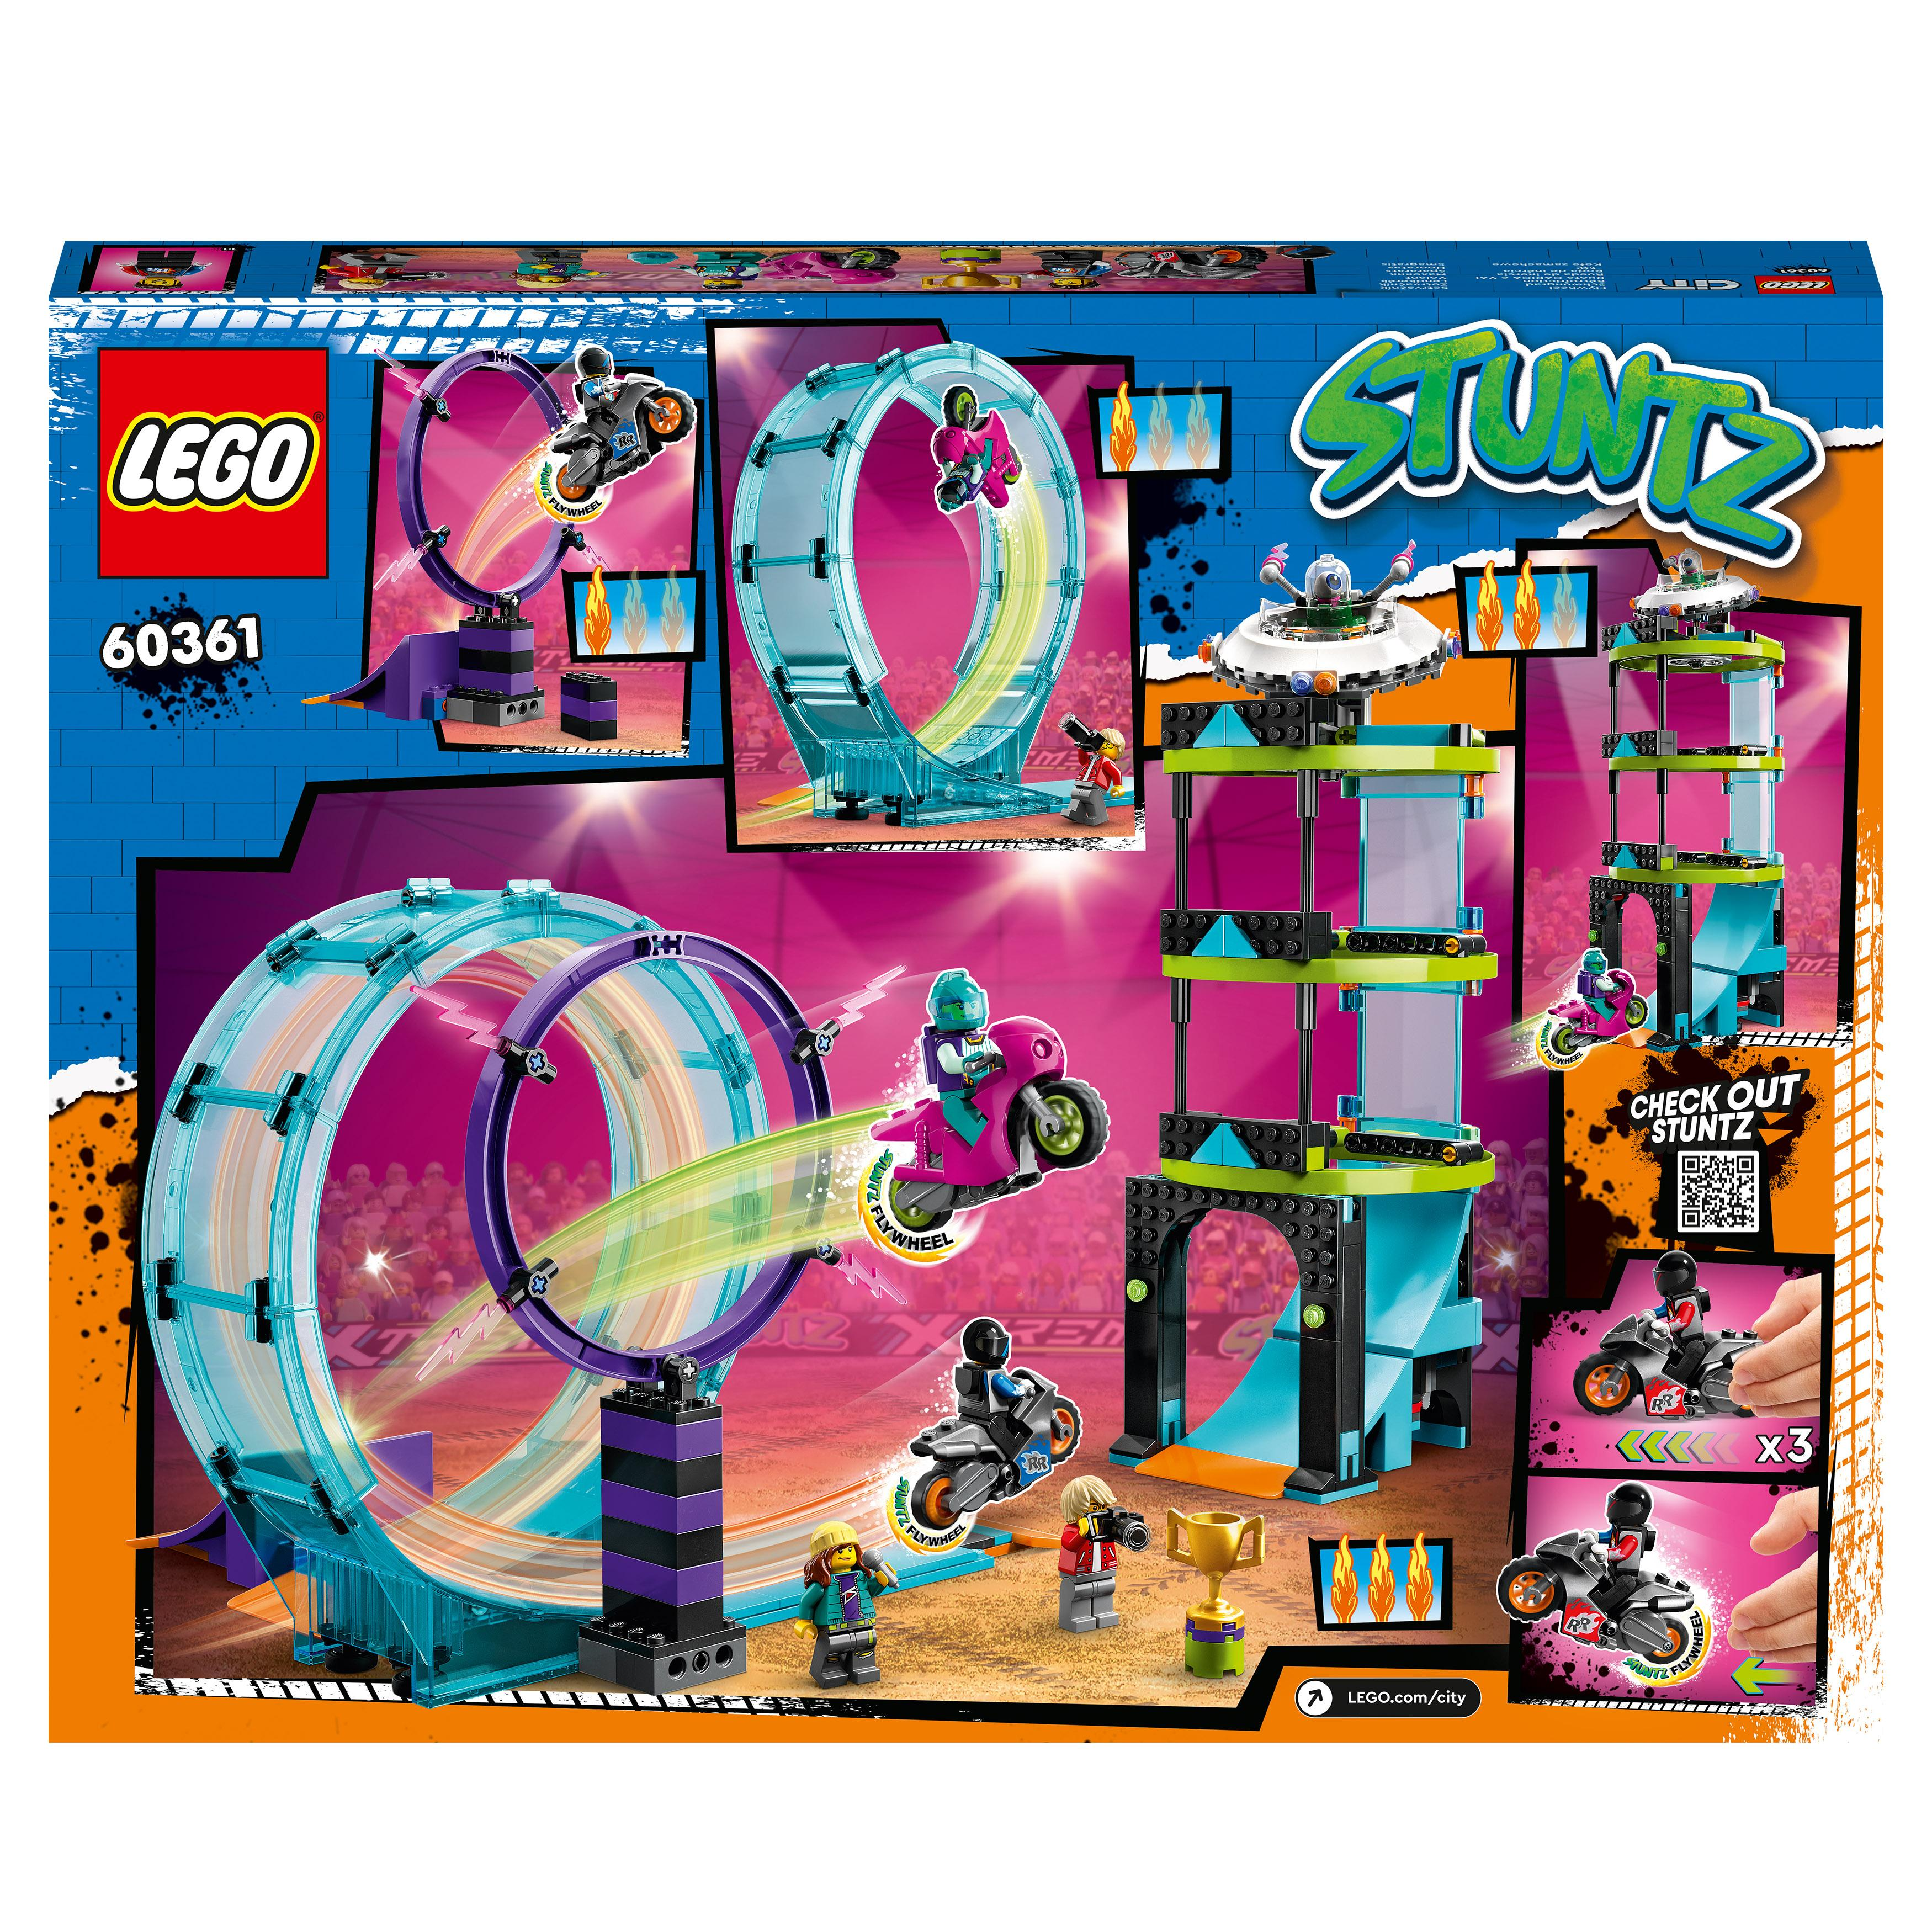 City 60361 Bausatz, Mehrfarbig Ultimative Stuntfahrer-Challenge Stuntz LEGO